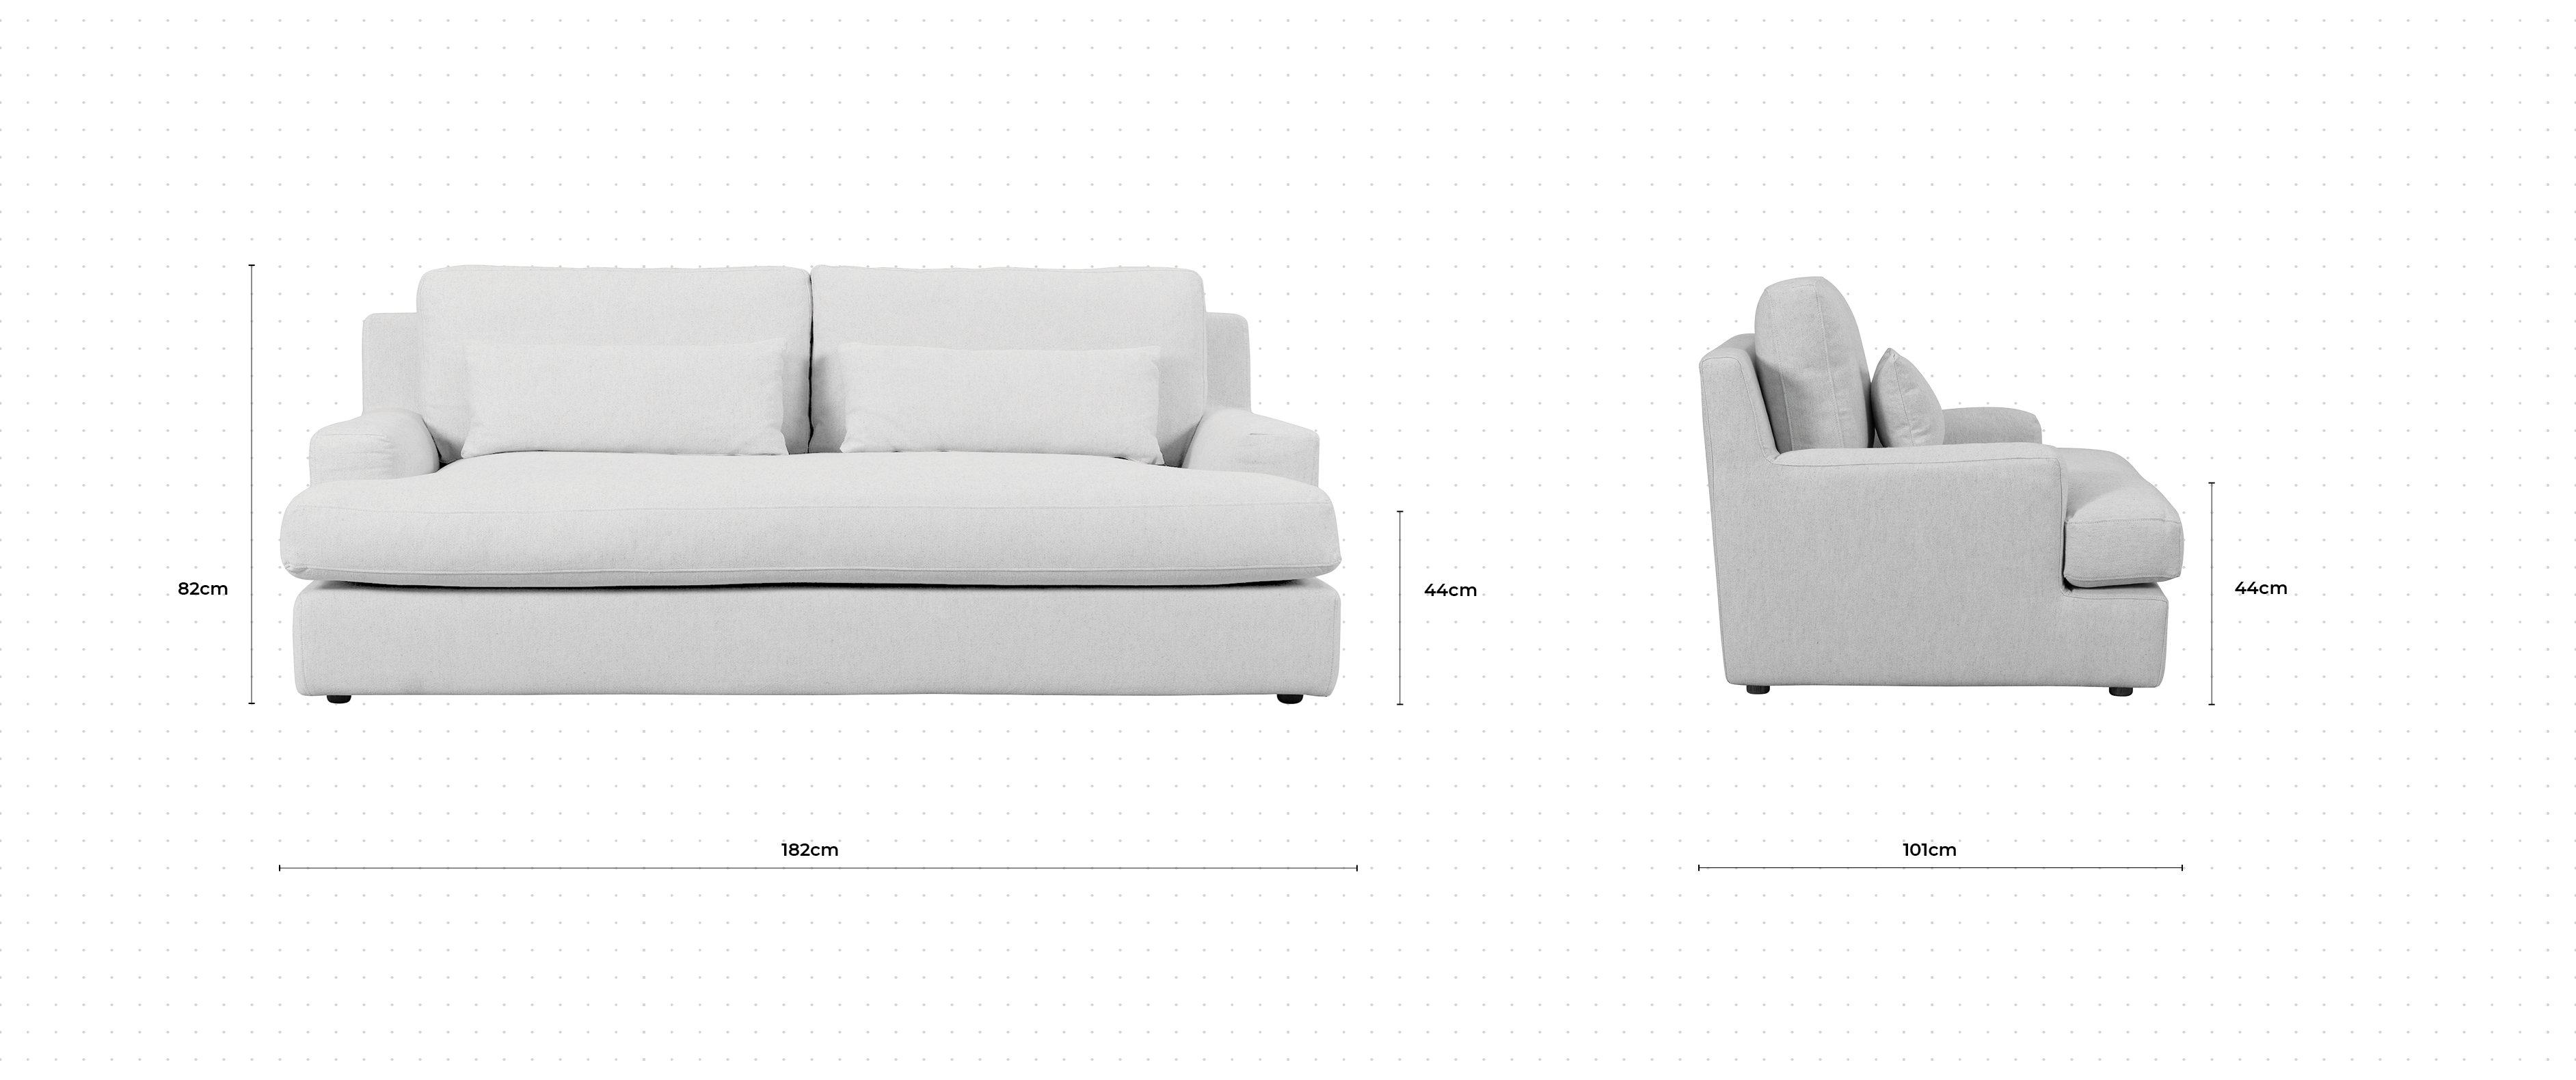 Panama 2 Seater Sofa dimensions